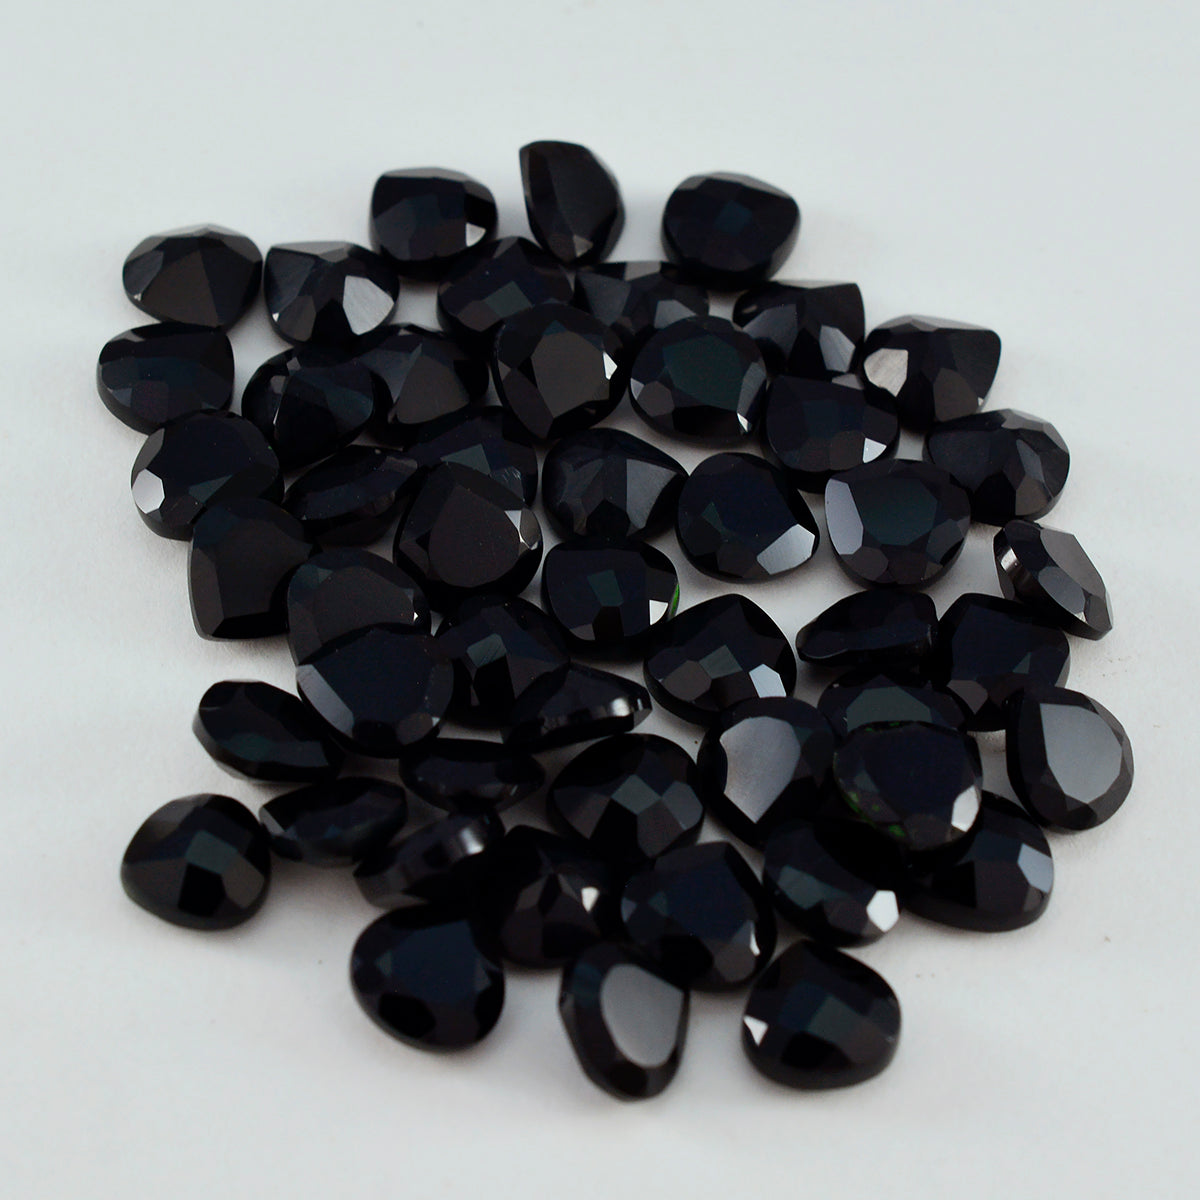 Riyogems 1PC Real Black Onyx Faceted 7x7 mm Heart Shape cute Quality Gems